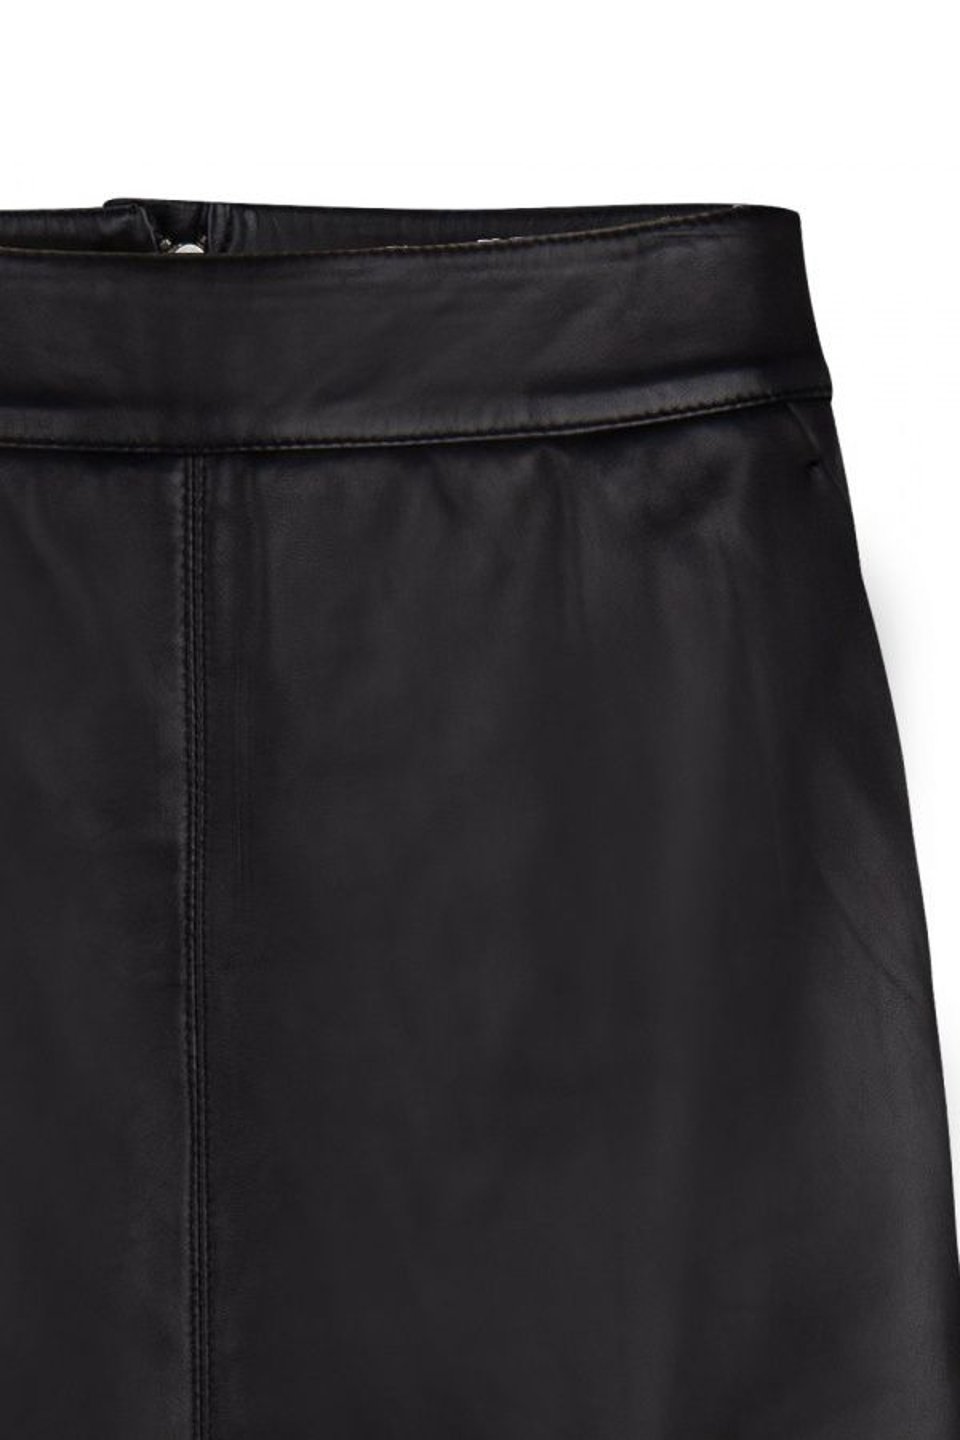 Pulson Leather Skirt - Black